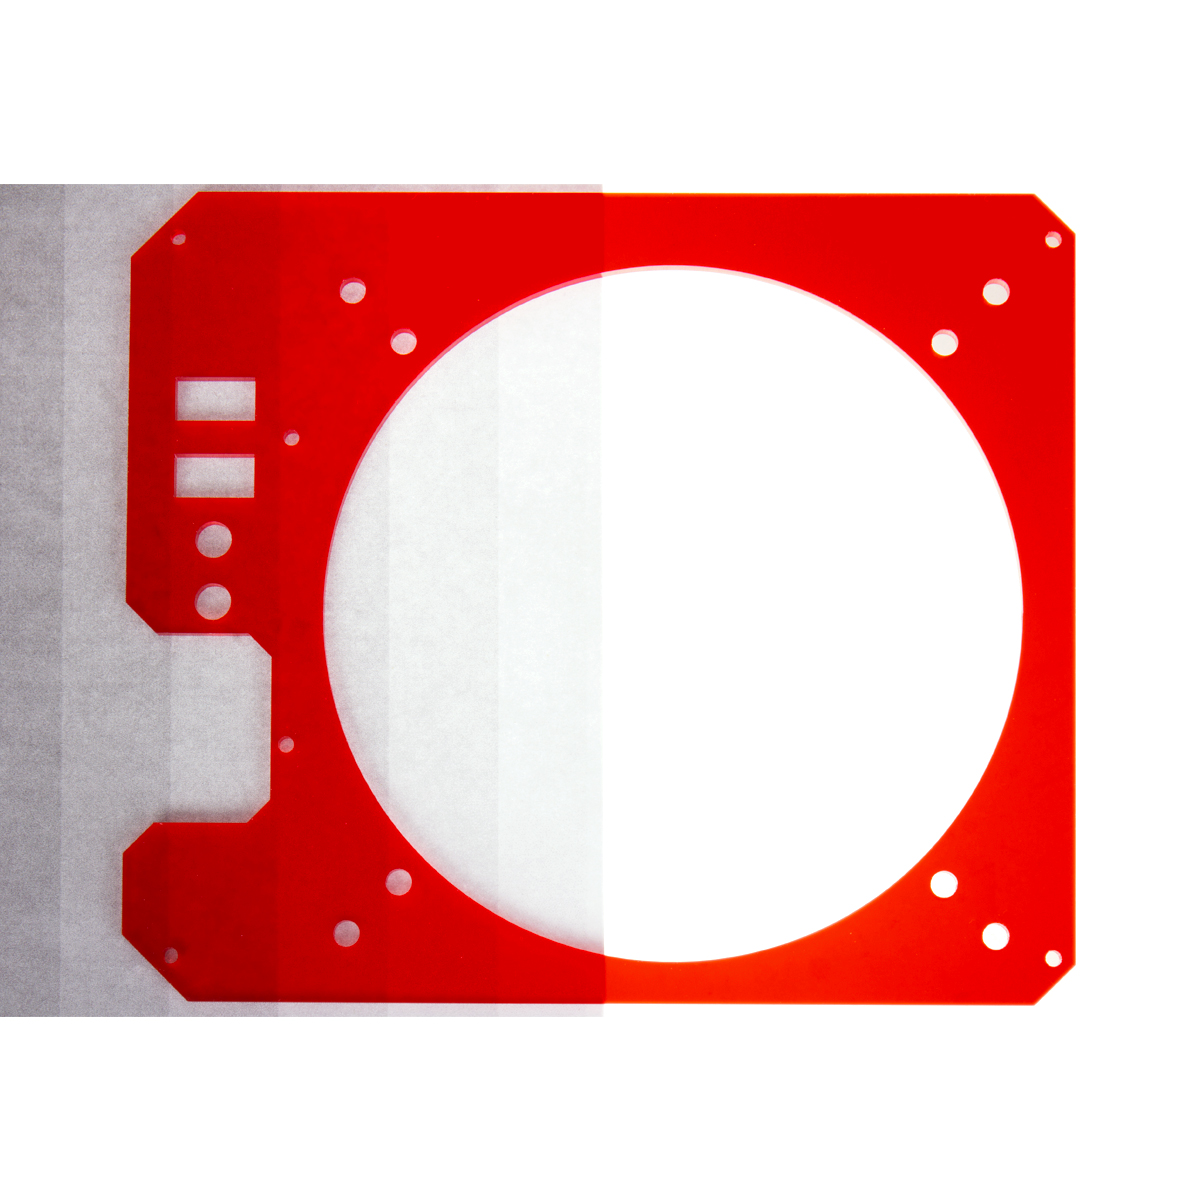 Lazer3D - Lazer3D LZ7 Right Panel - Chilli Red Open